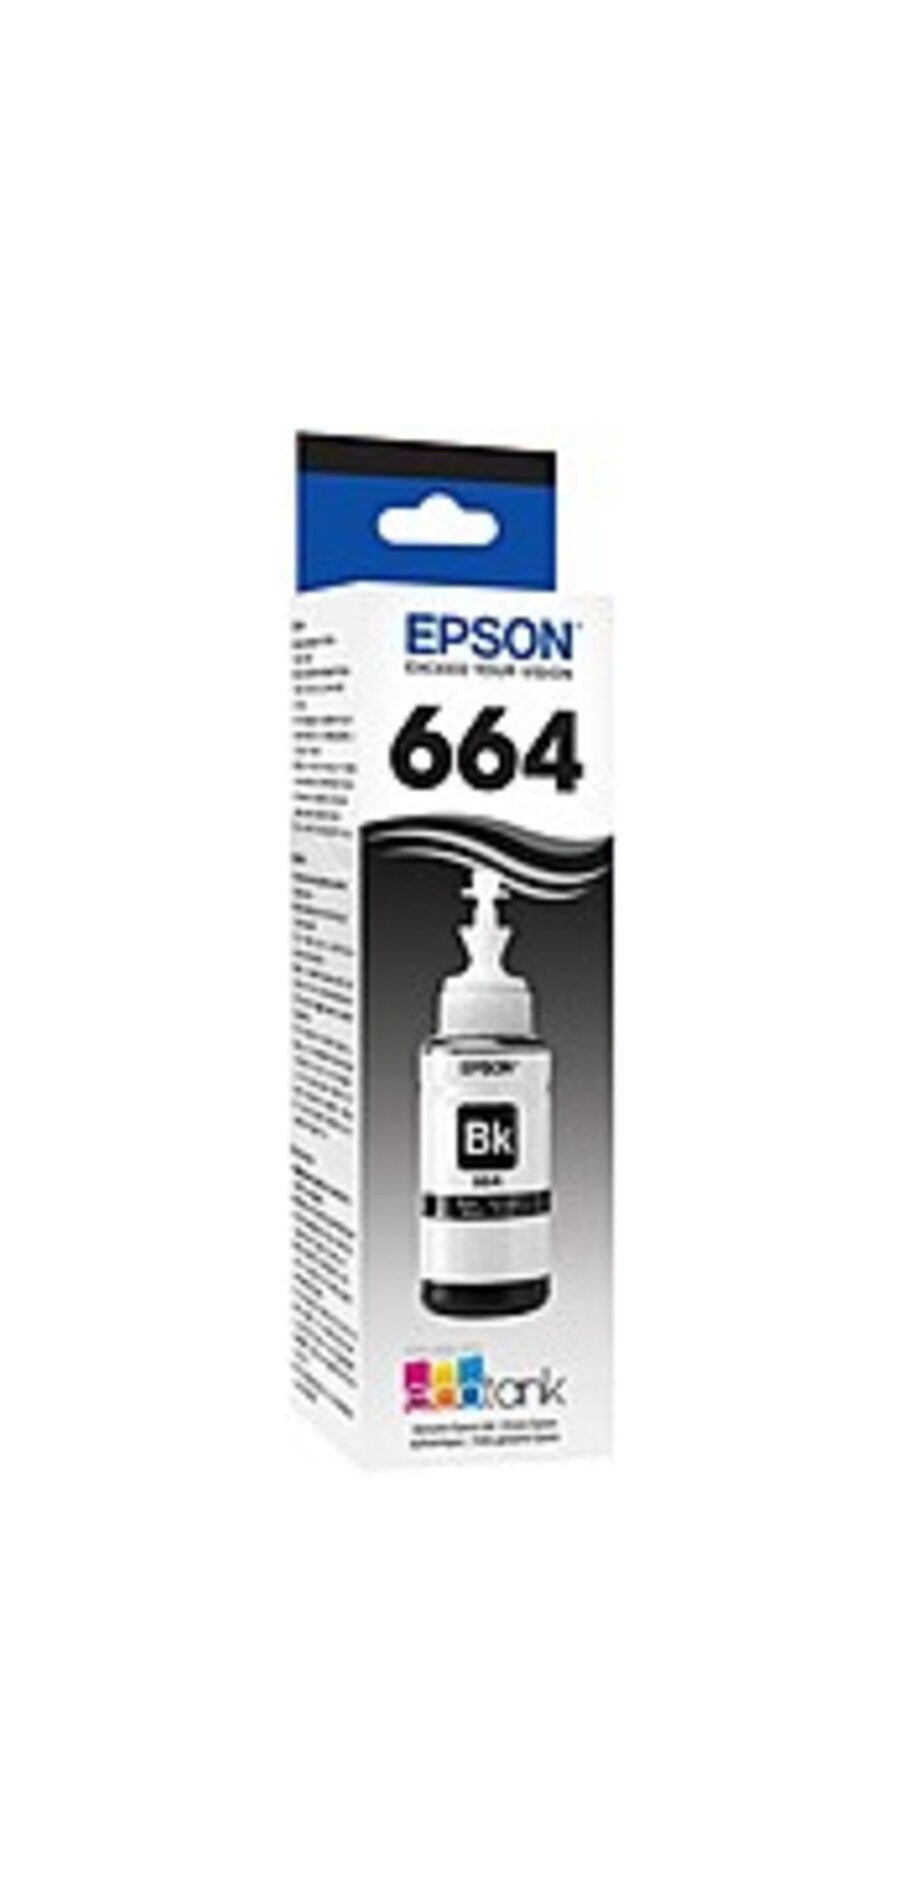 Image of Epson EPST664120 70 mL Ink Bottle for ET-2500, ET-2550, and ET-4500 EcoTank Printers - 1 Pack - 4000 Pages - Black